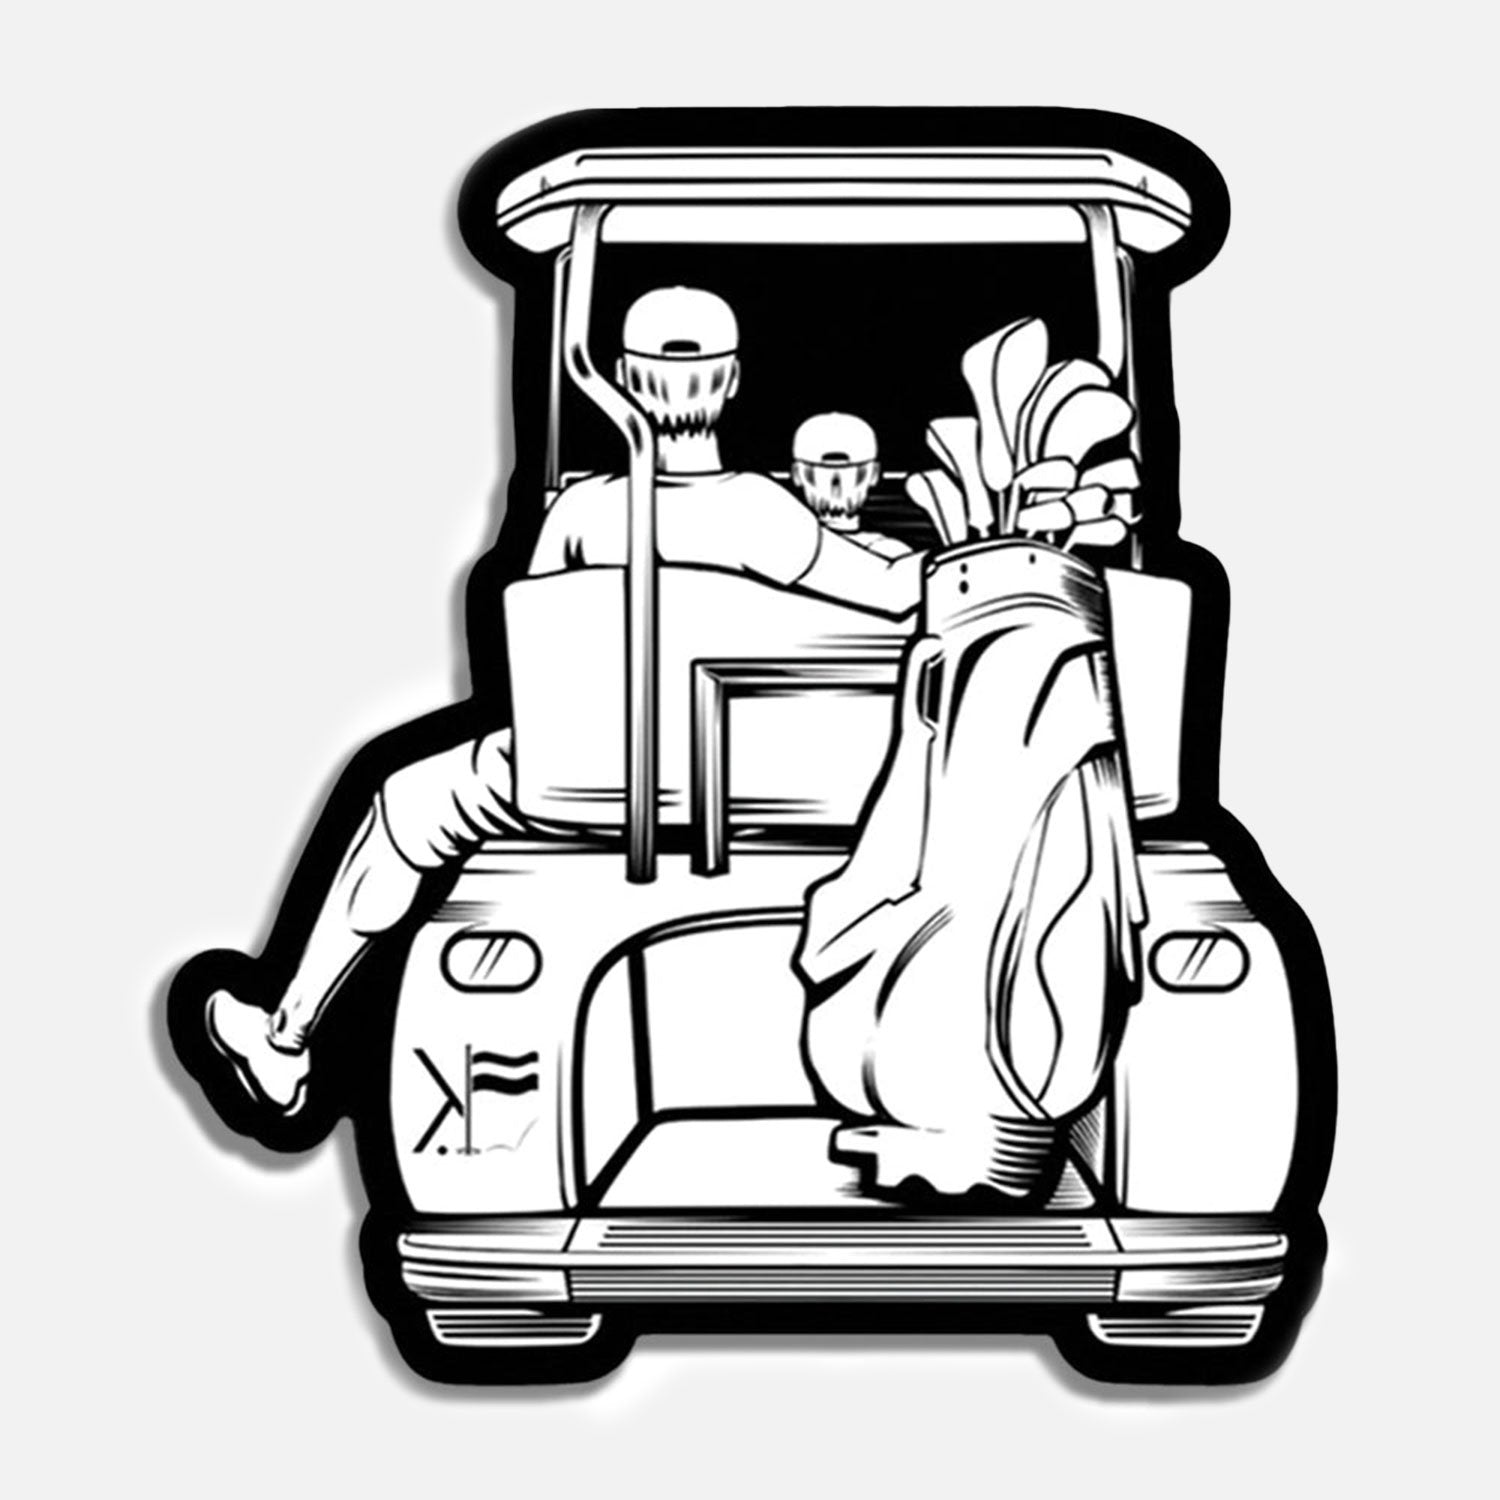 Dad & Son Golf Cart Magnet - F. King Golf